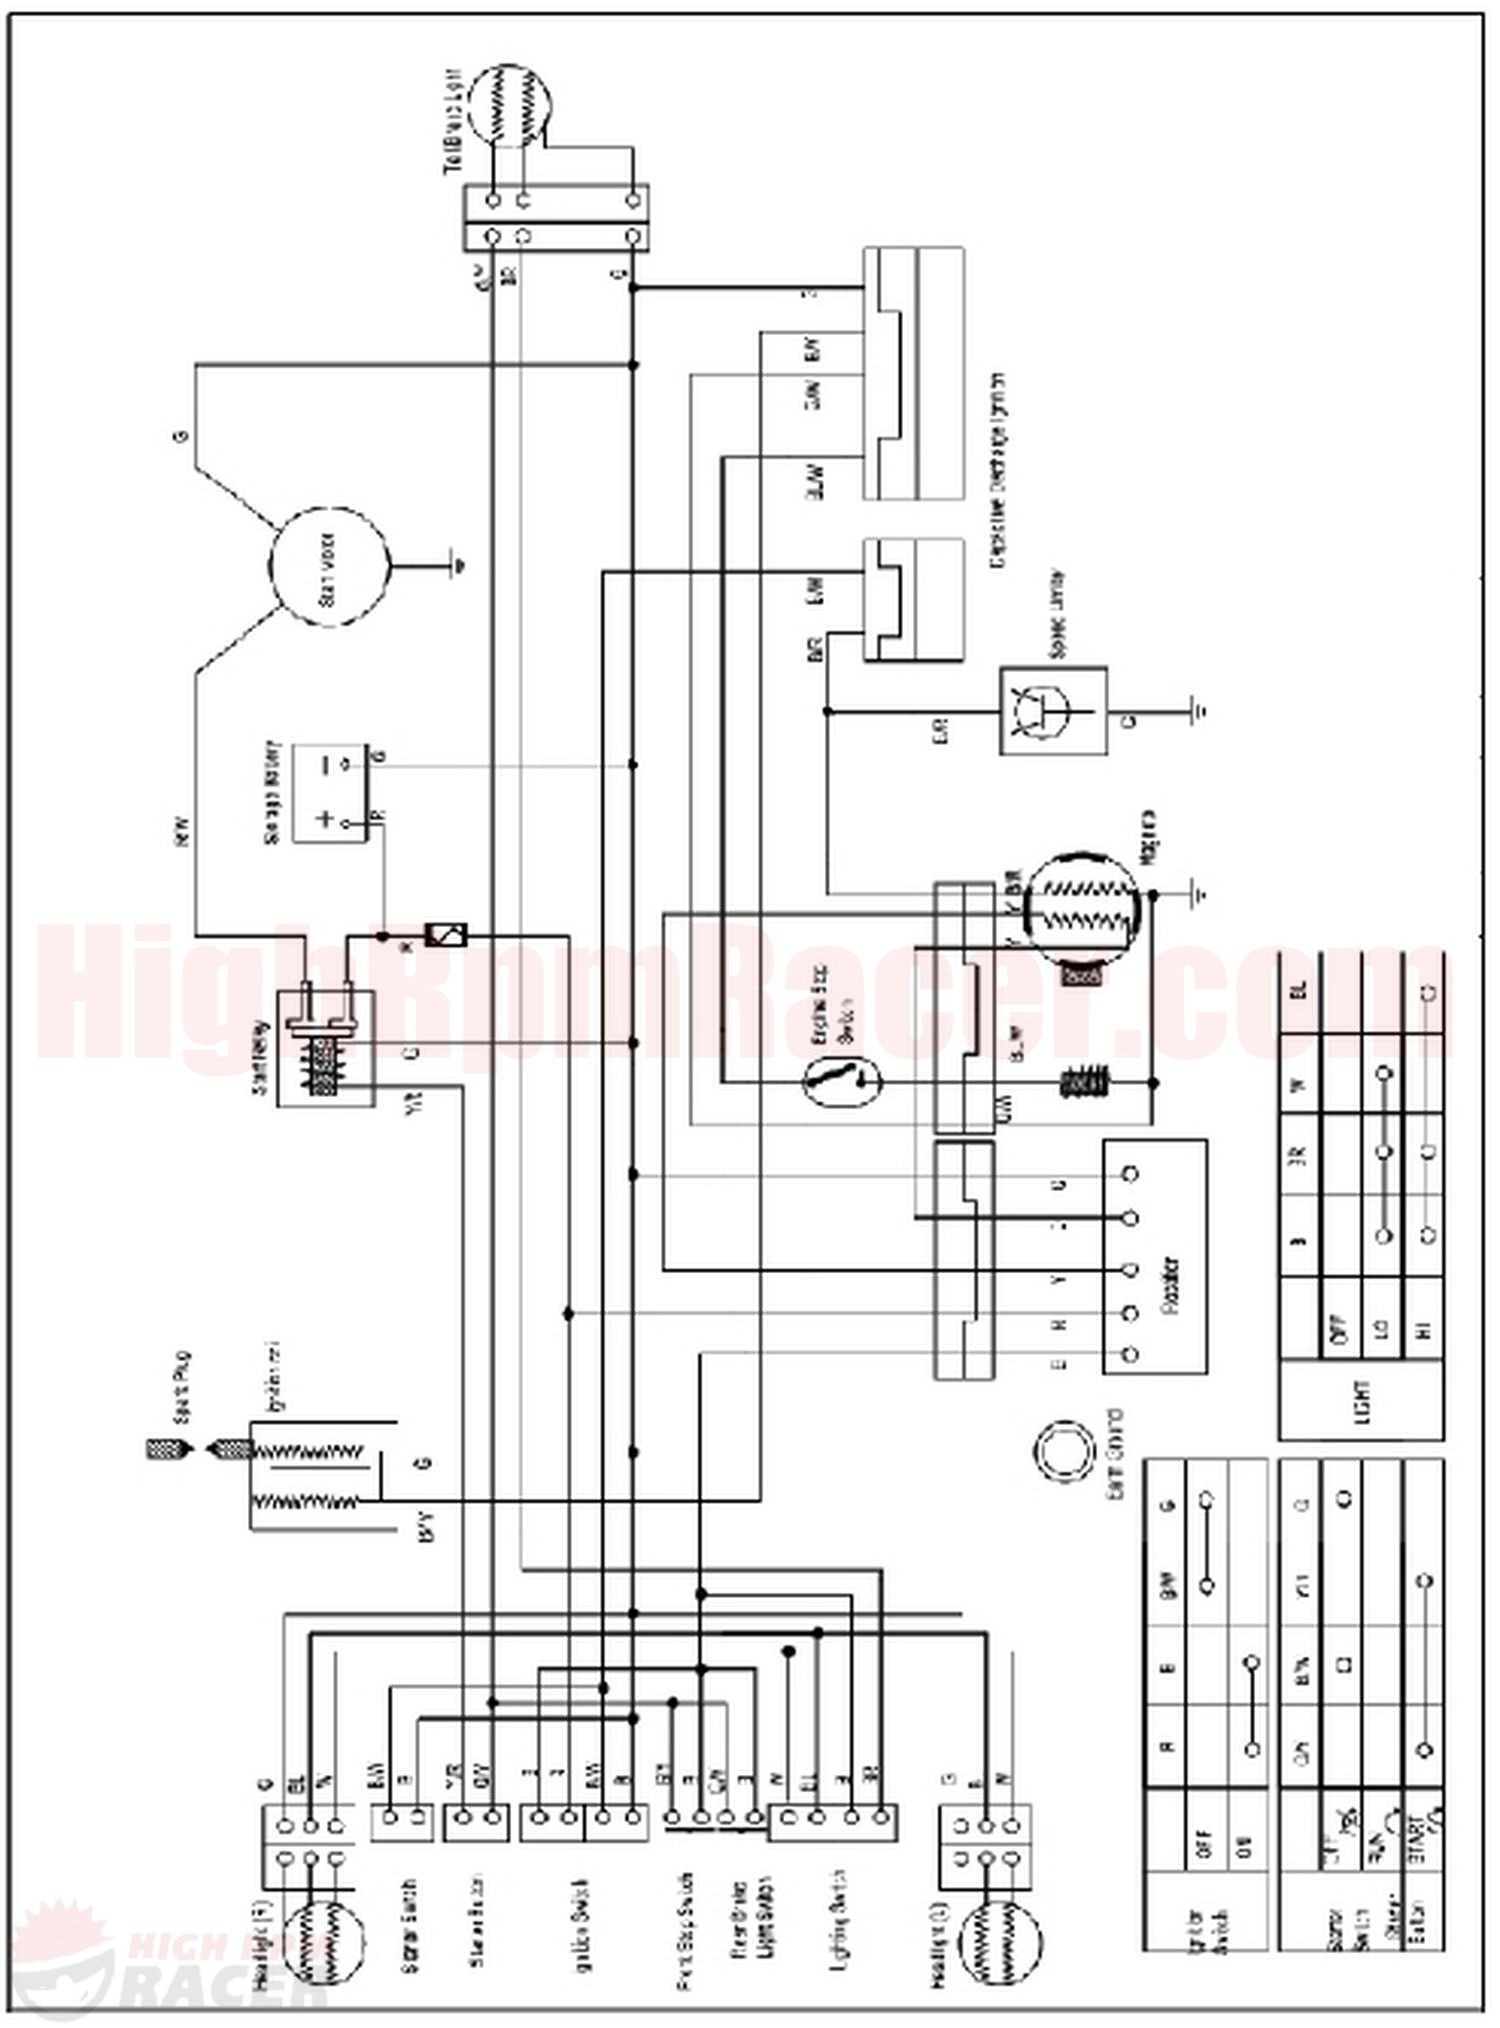 Wiring Diagram For 110cc 4 Wheeler Inspirational 110cc Chinese Atv Wiring Diagram Originalstylophone – Wiring Diagram